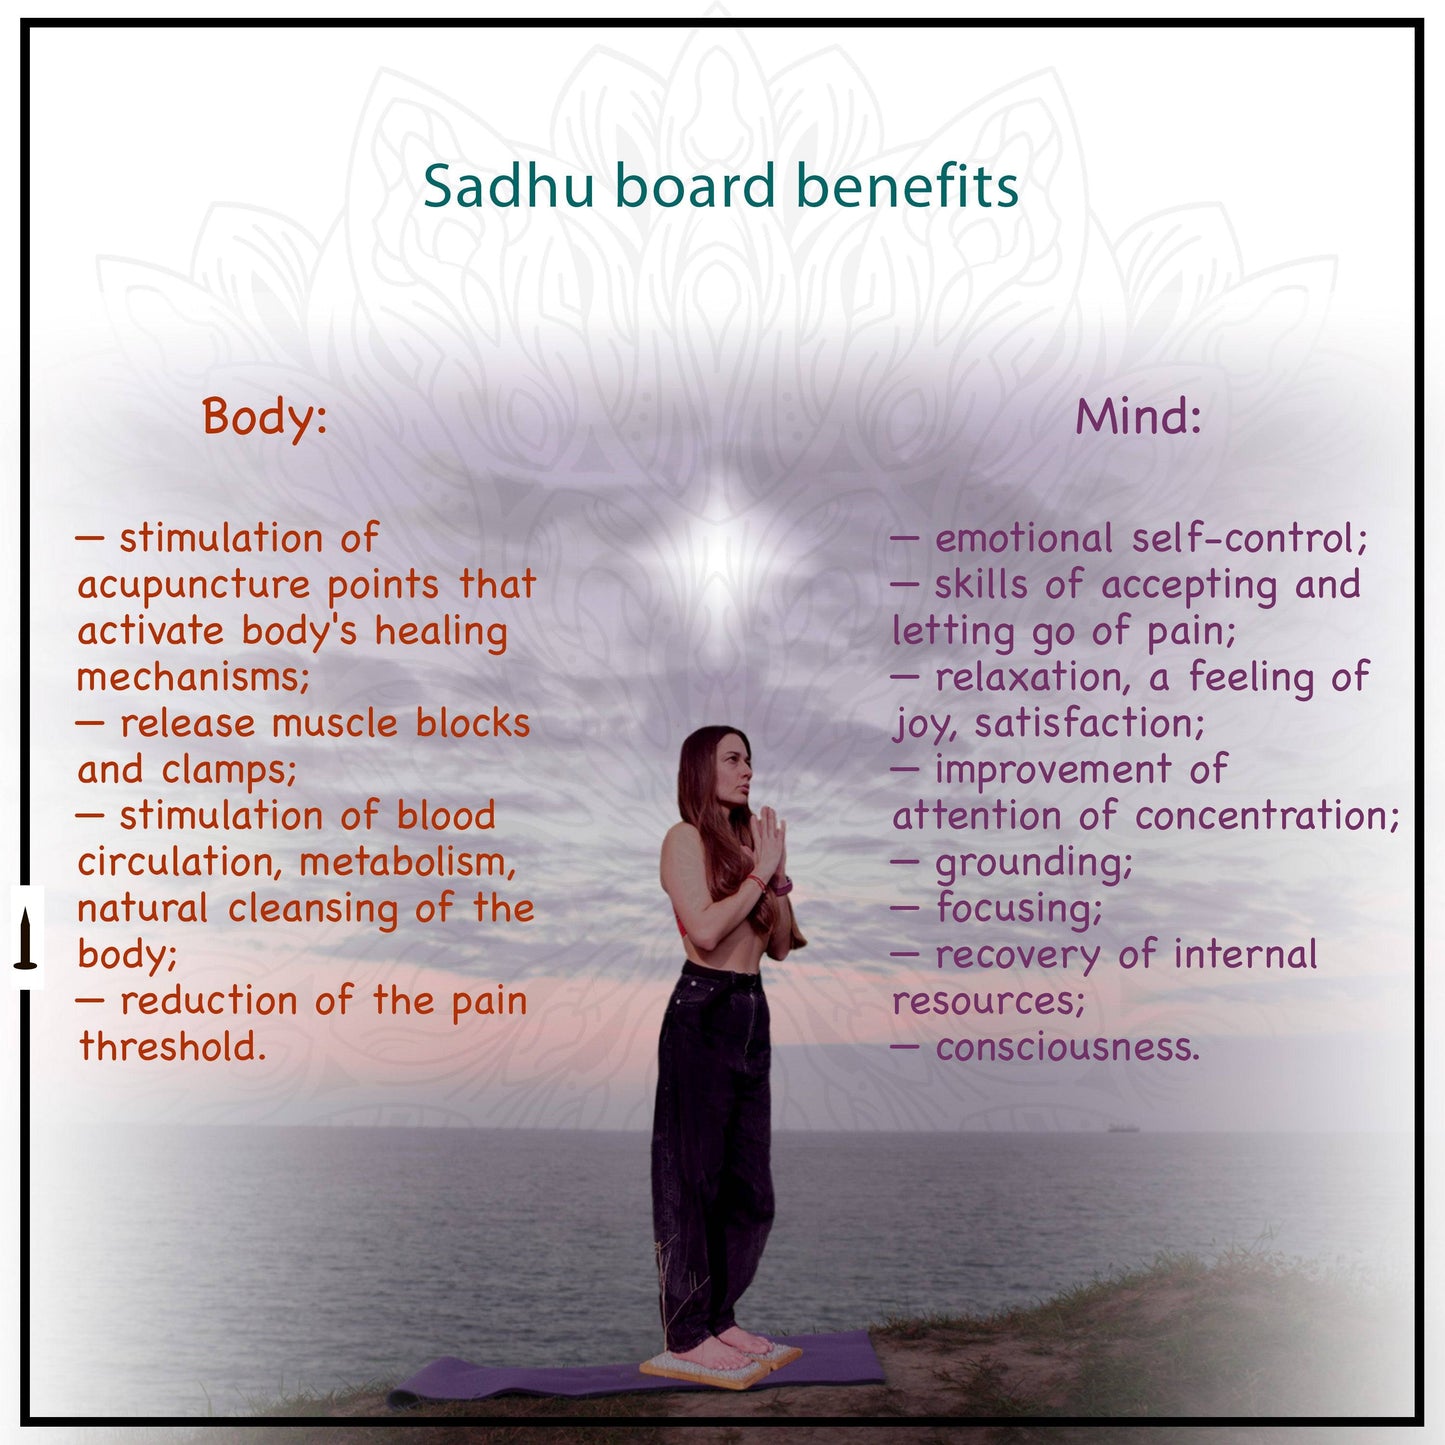 Description of Sadhu board benefits for body and mind. Girl doing Sadhu board meditation practice on the seashore